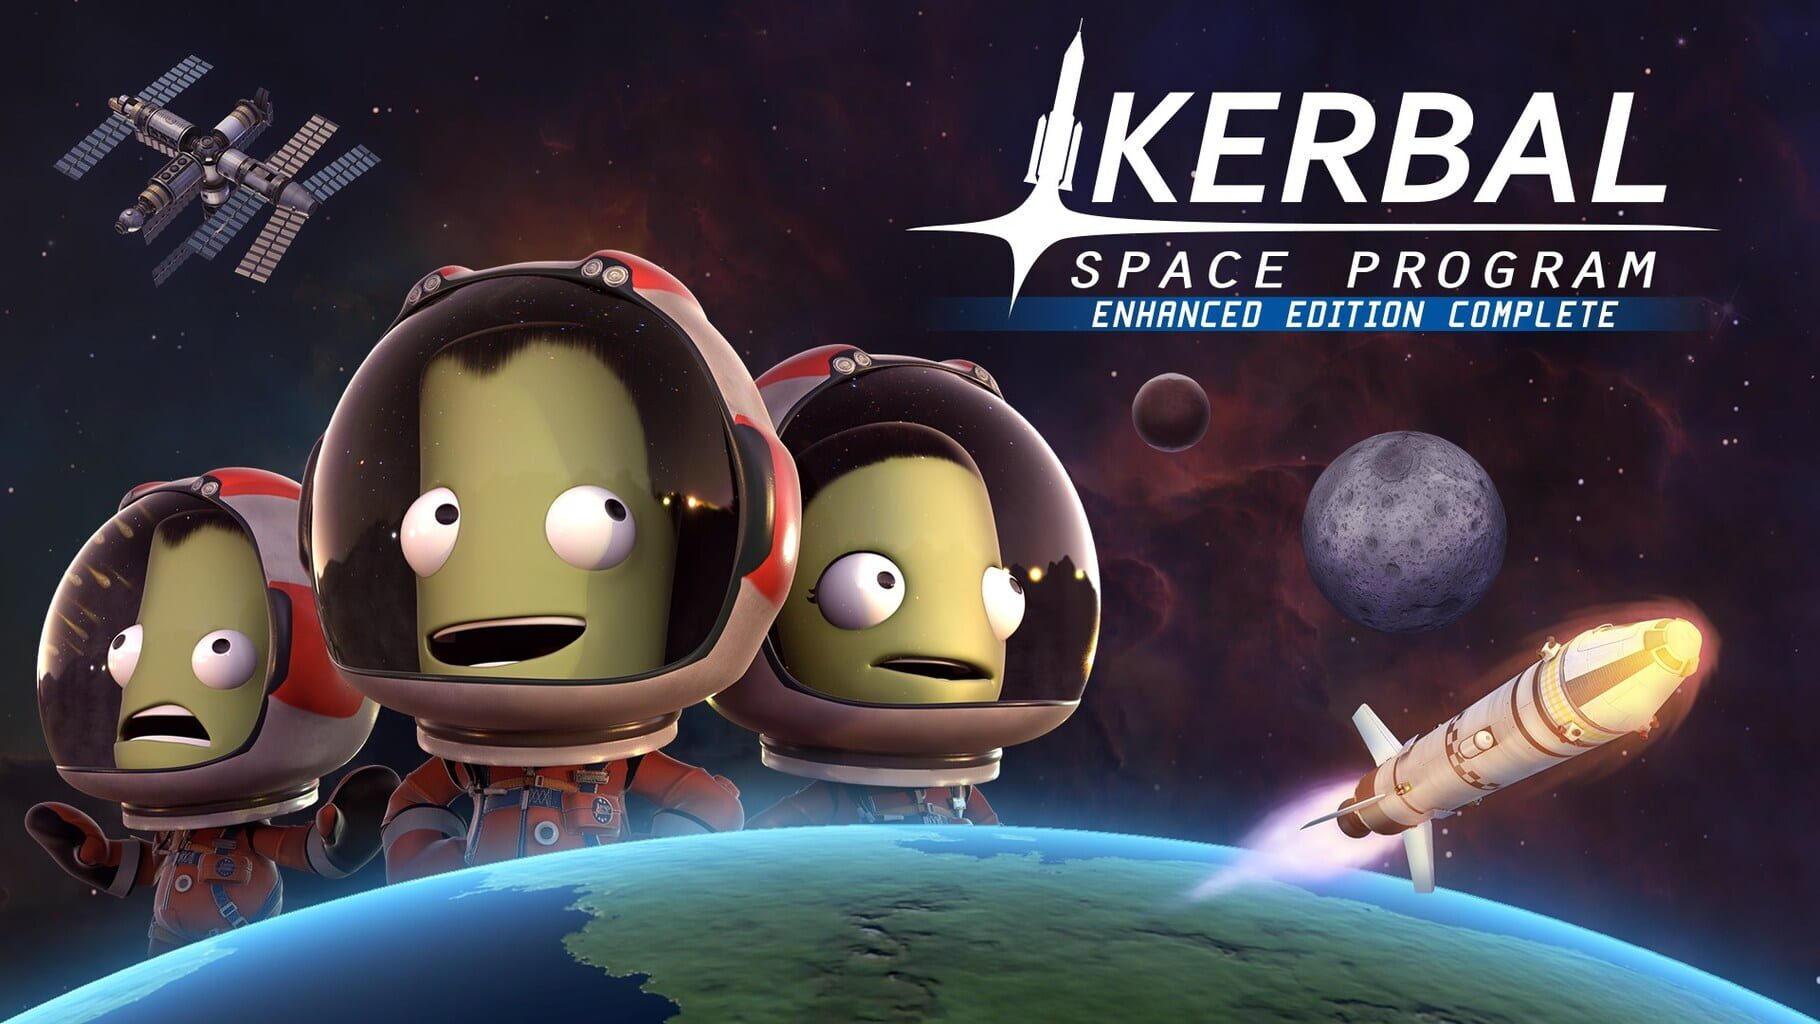 Arte - Kerbal Space Program: Enhanced Edition Complete